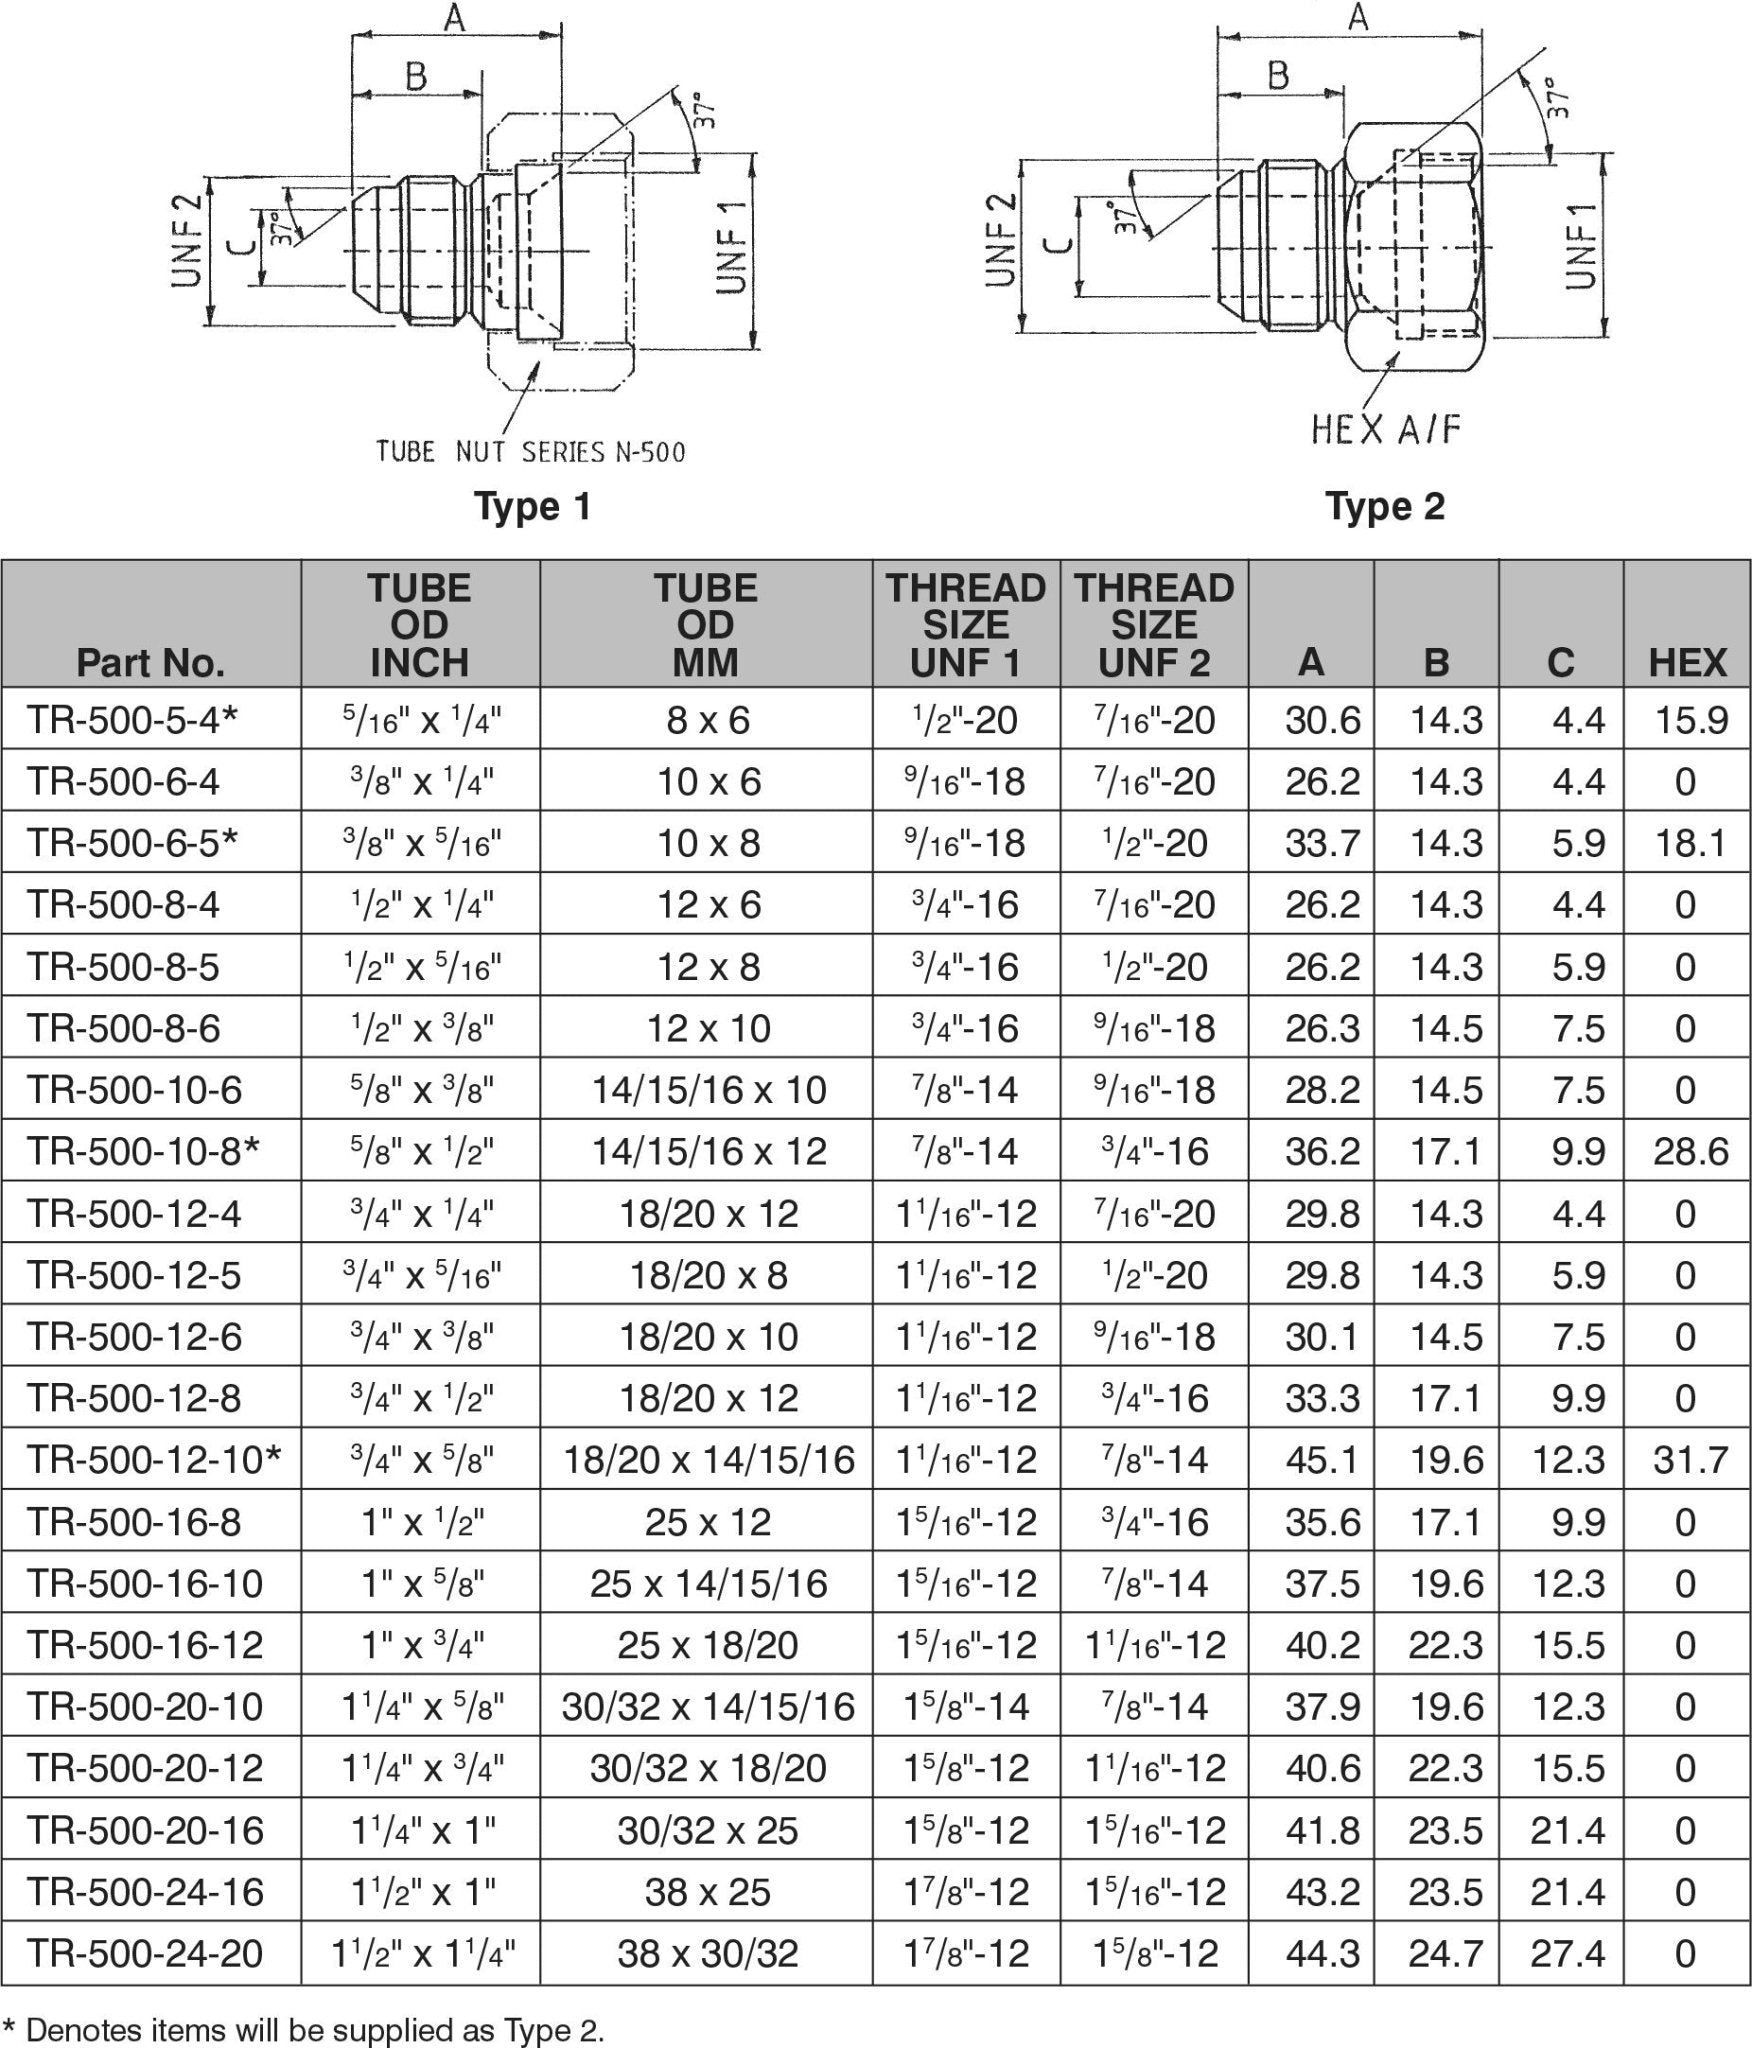 1.1/16-12 x 9/16"-18 JIC TUBE END REDUCER TYPE 1.-TR-500-12-06